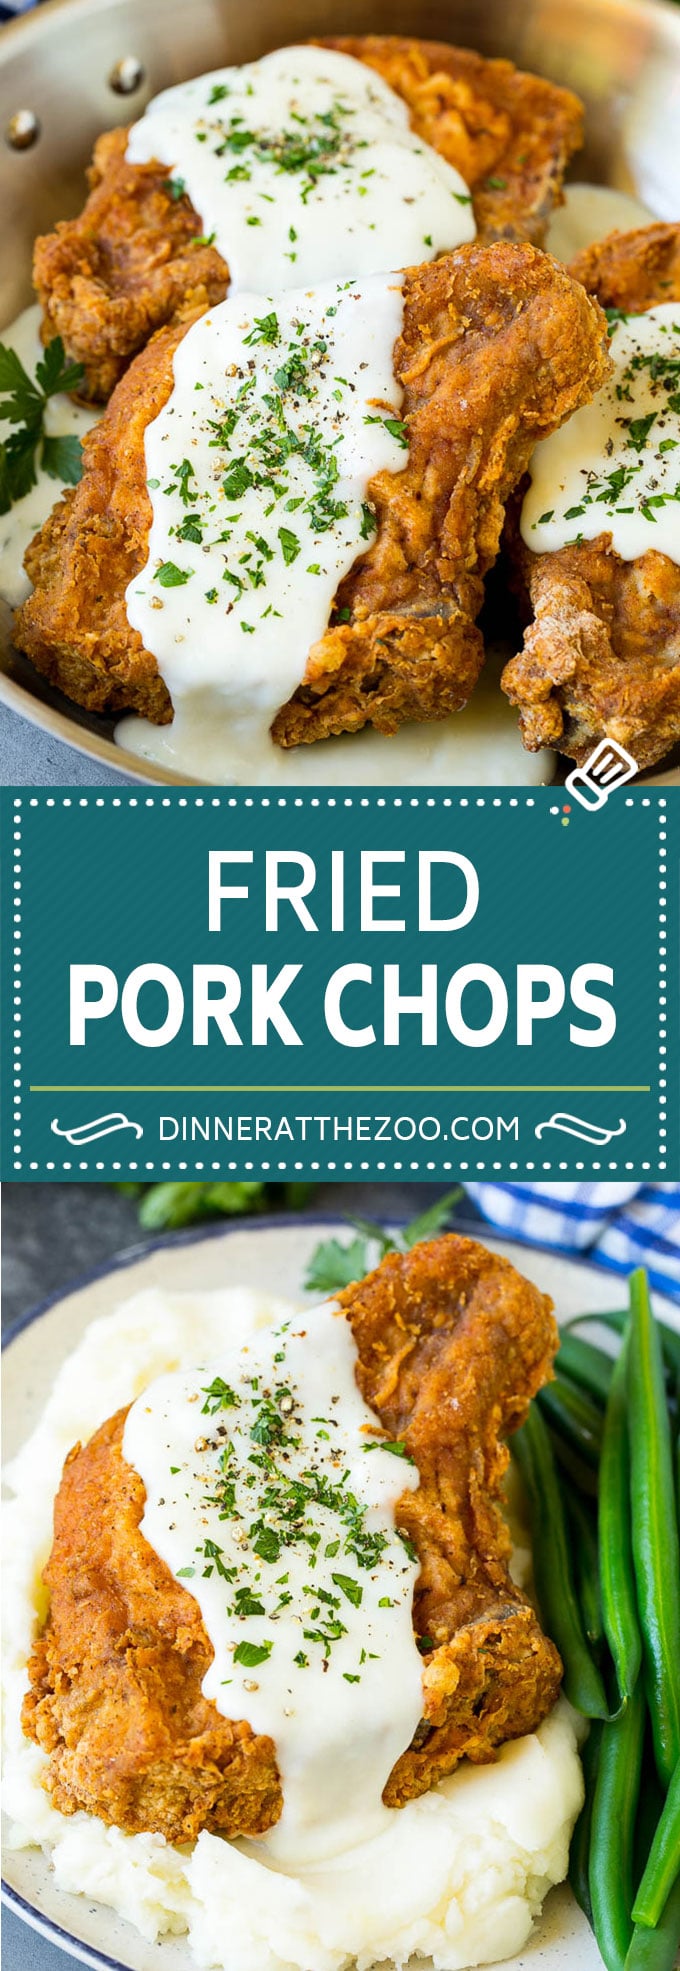 Fried Pork Chops Recipe | Pork Chop Recipe #porkchops #pork #dinner #dinneratthezoo #comfortfood